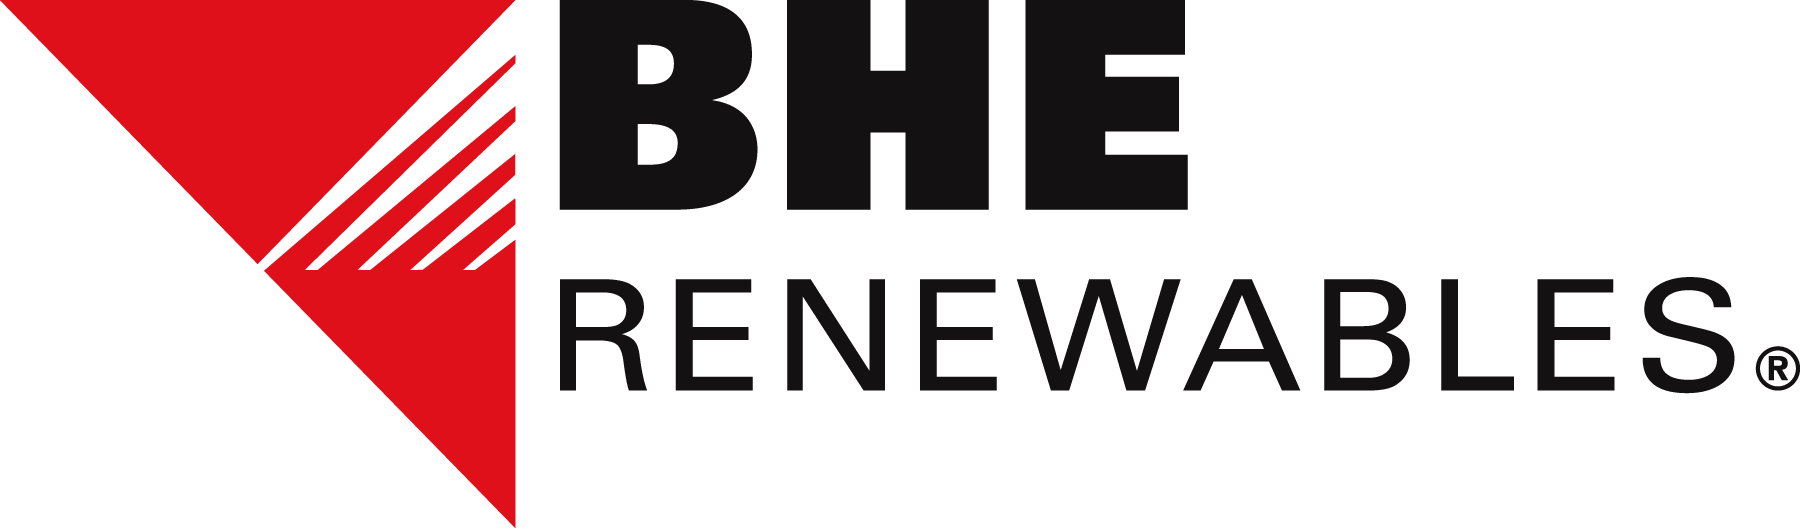 BHE Renewables logo